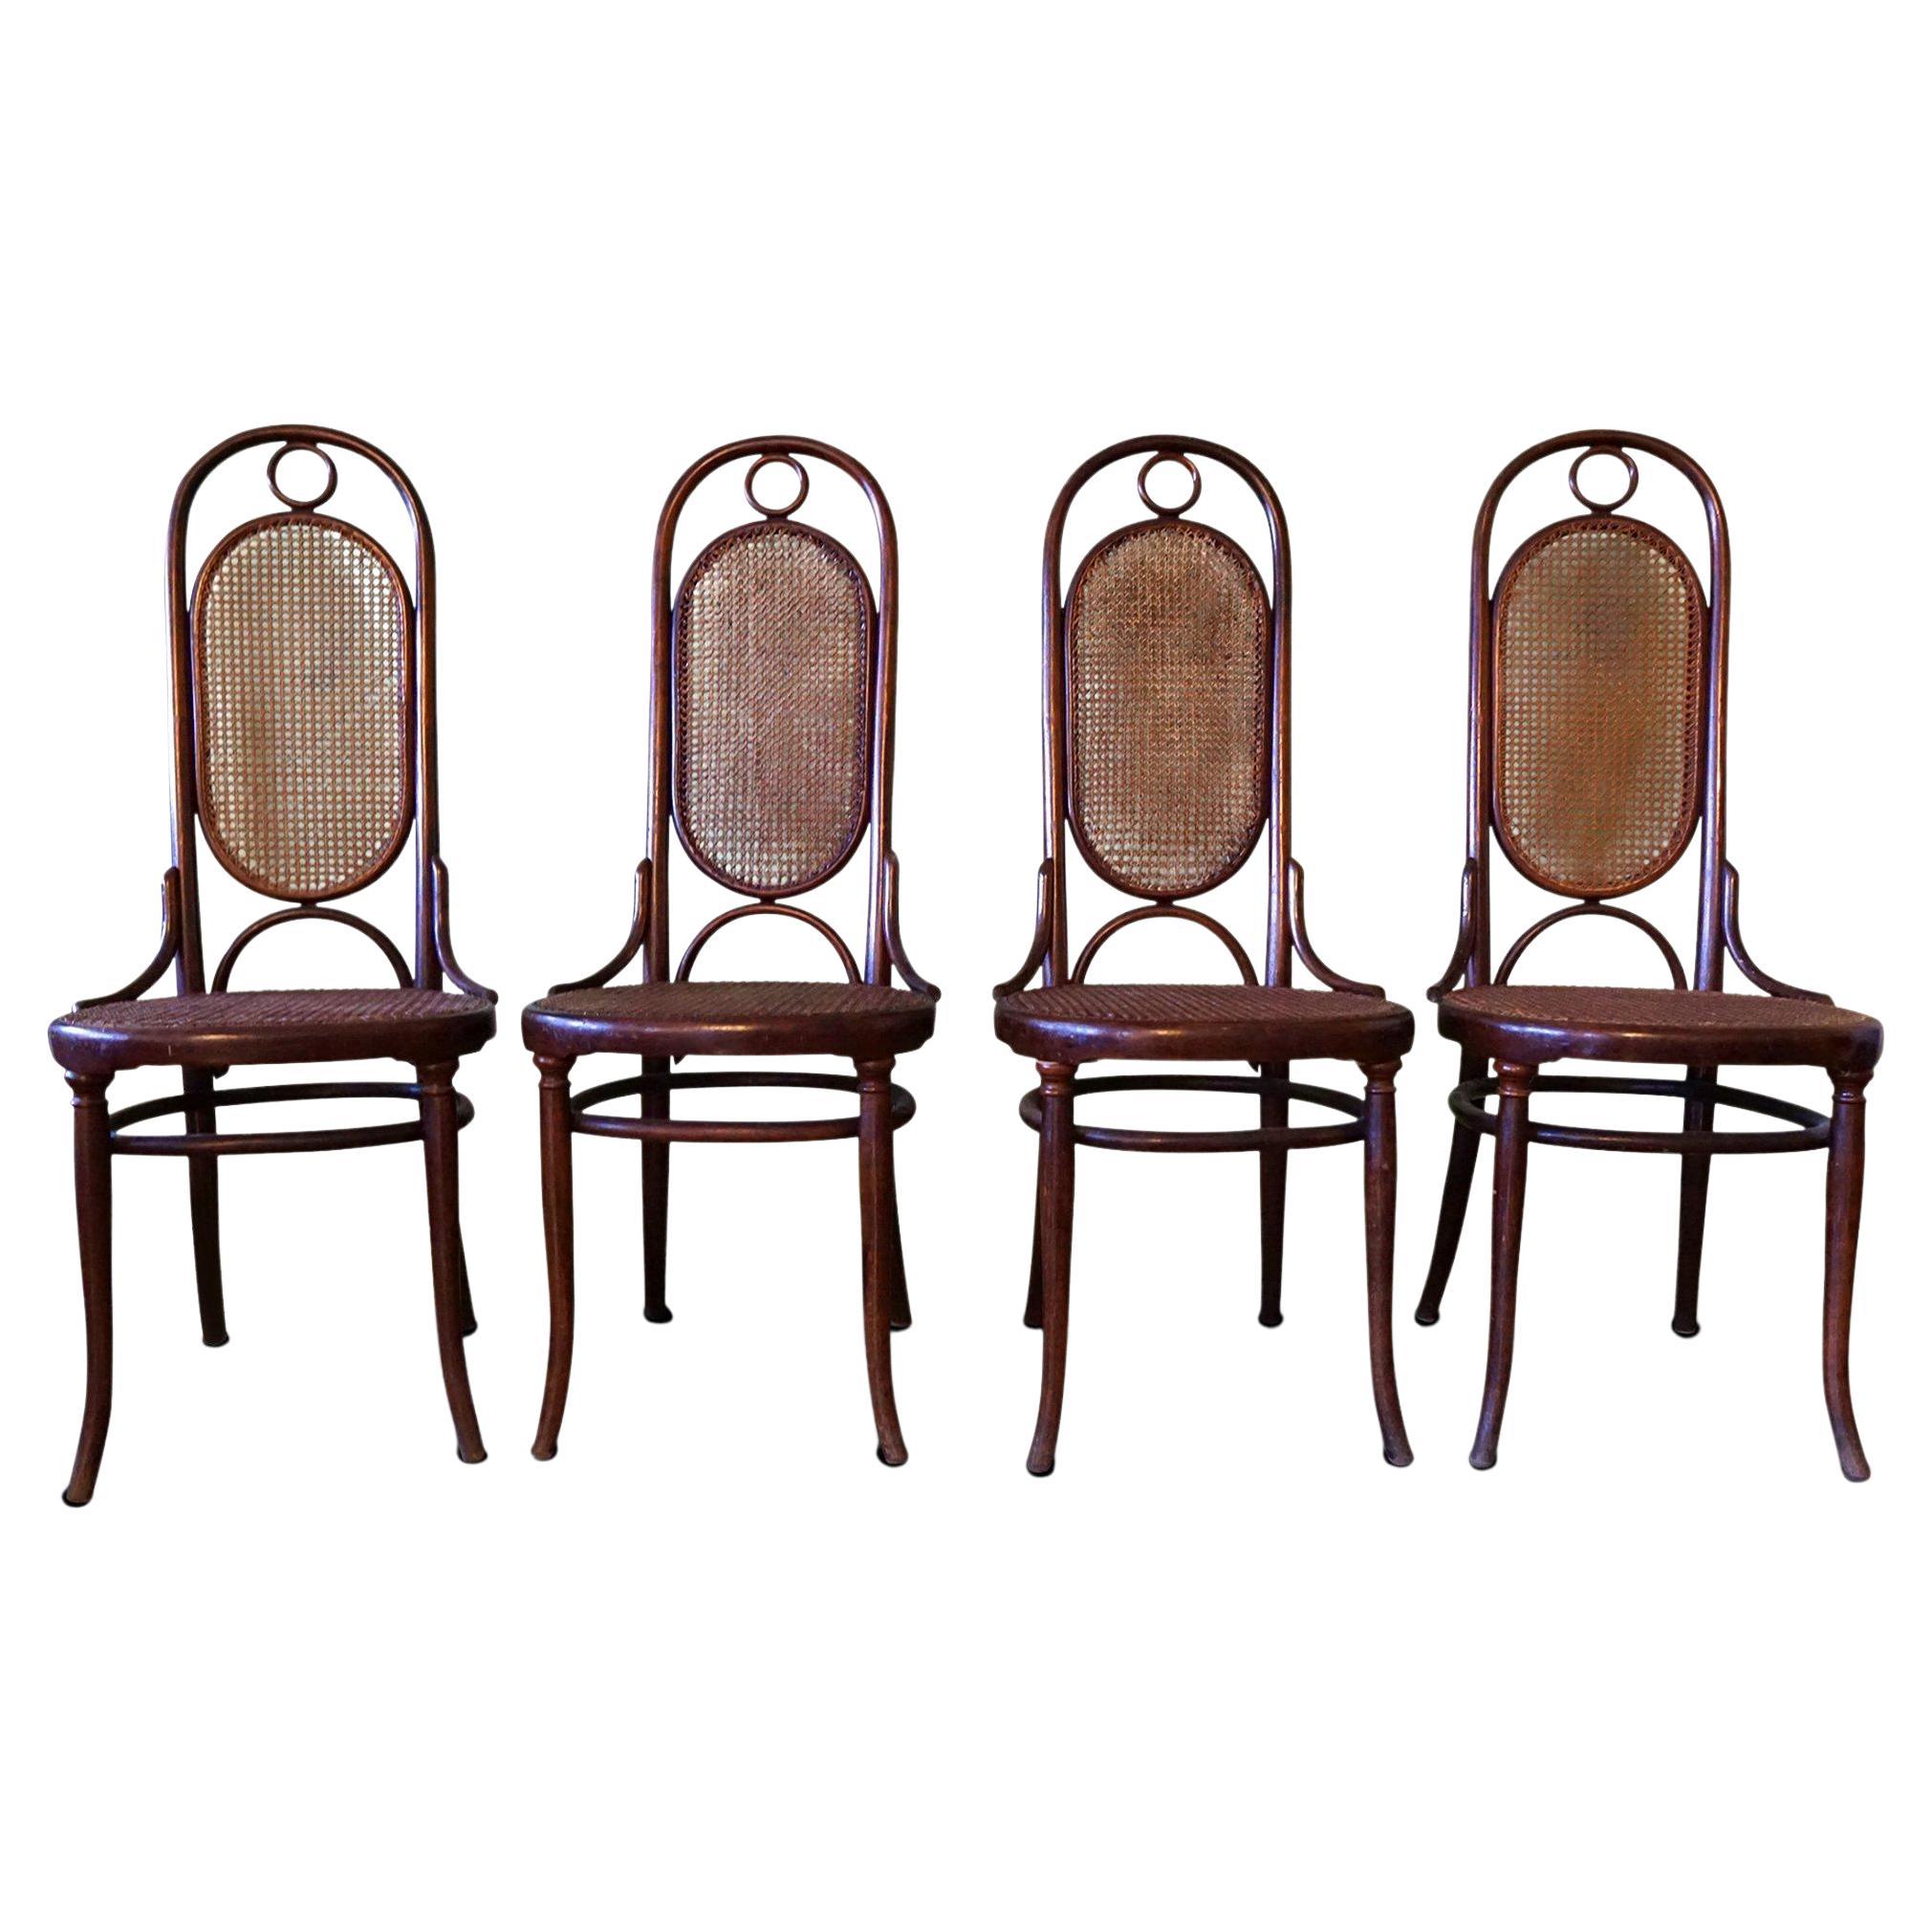 4 Original Tonet Chairs